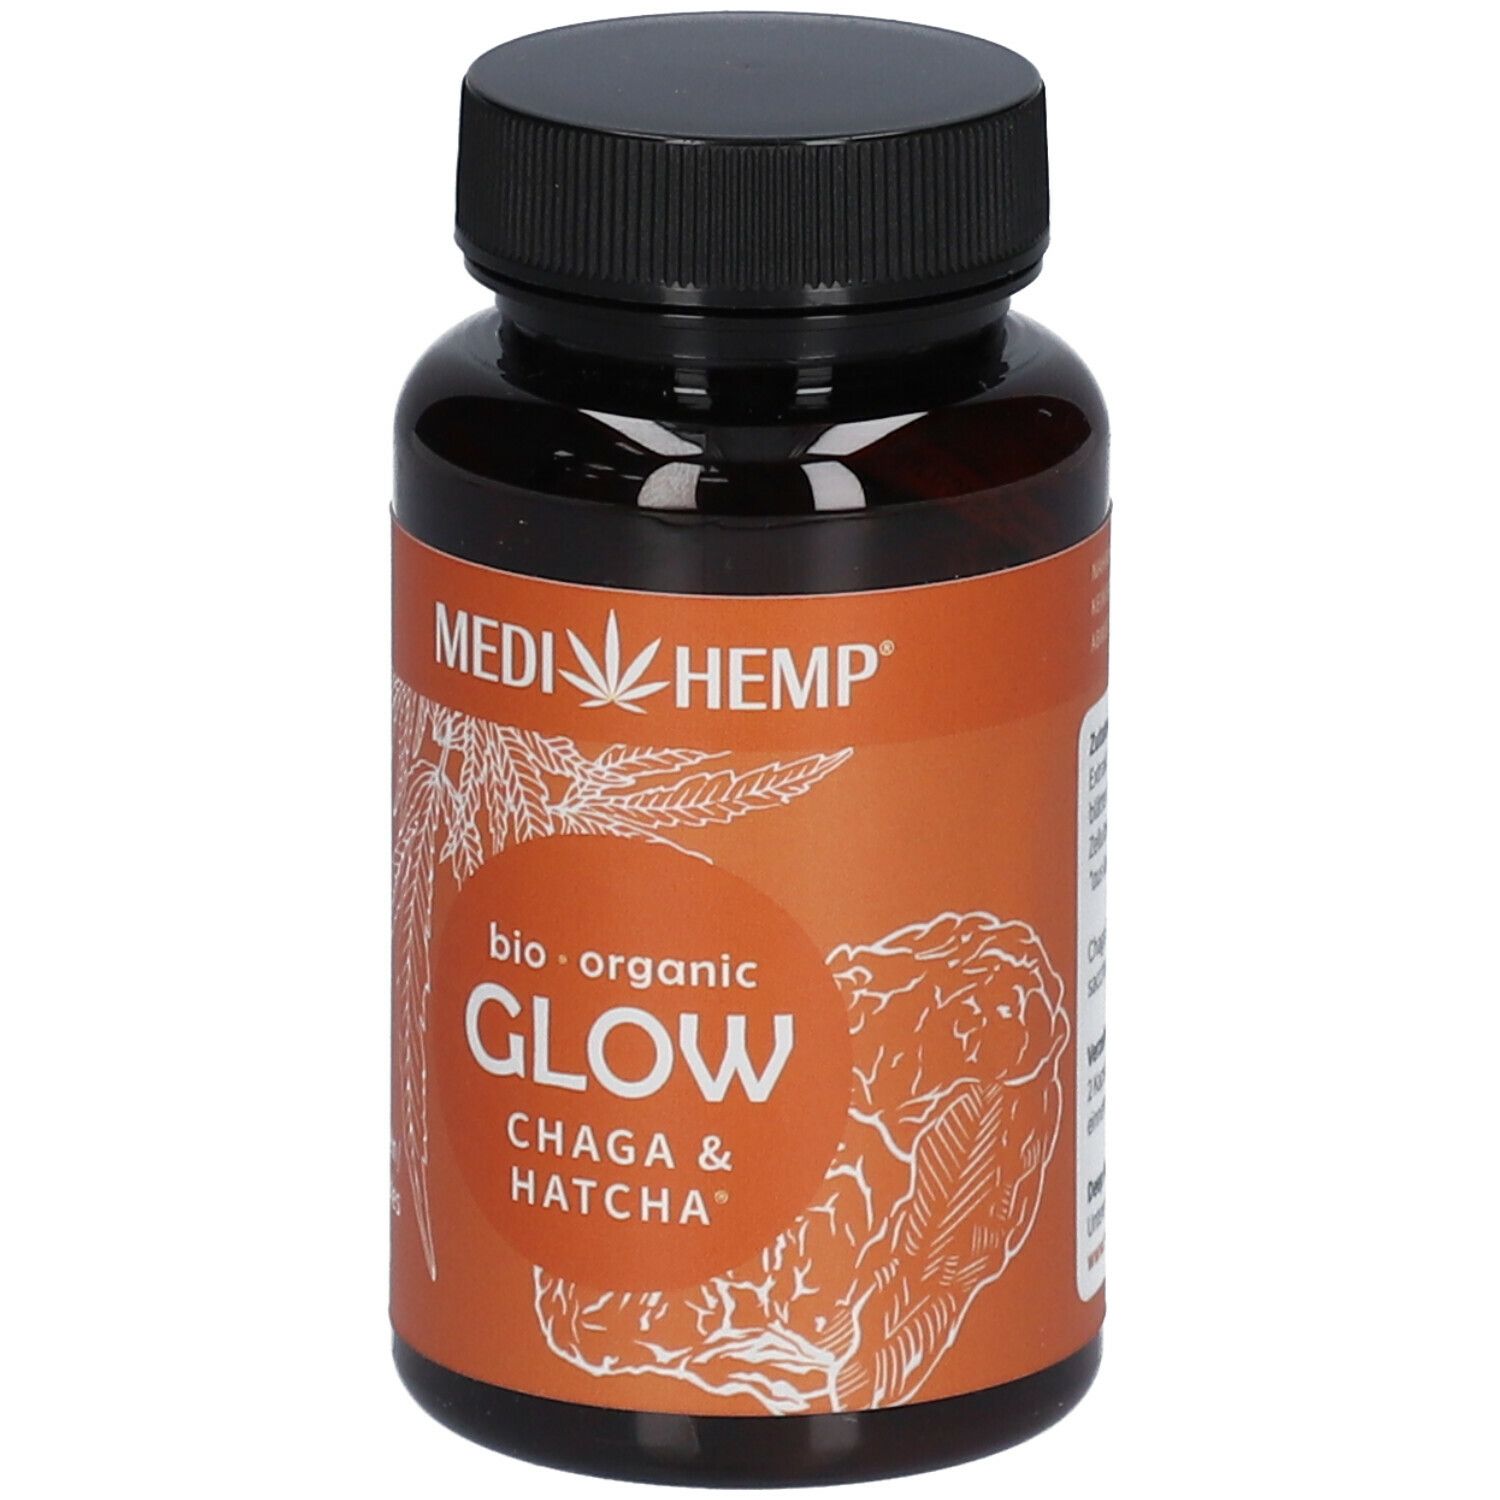 MEDIHEMP Bio Glow Chaga Hatcha® Kapseln